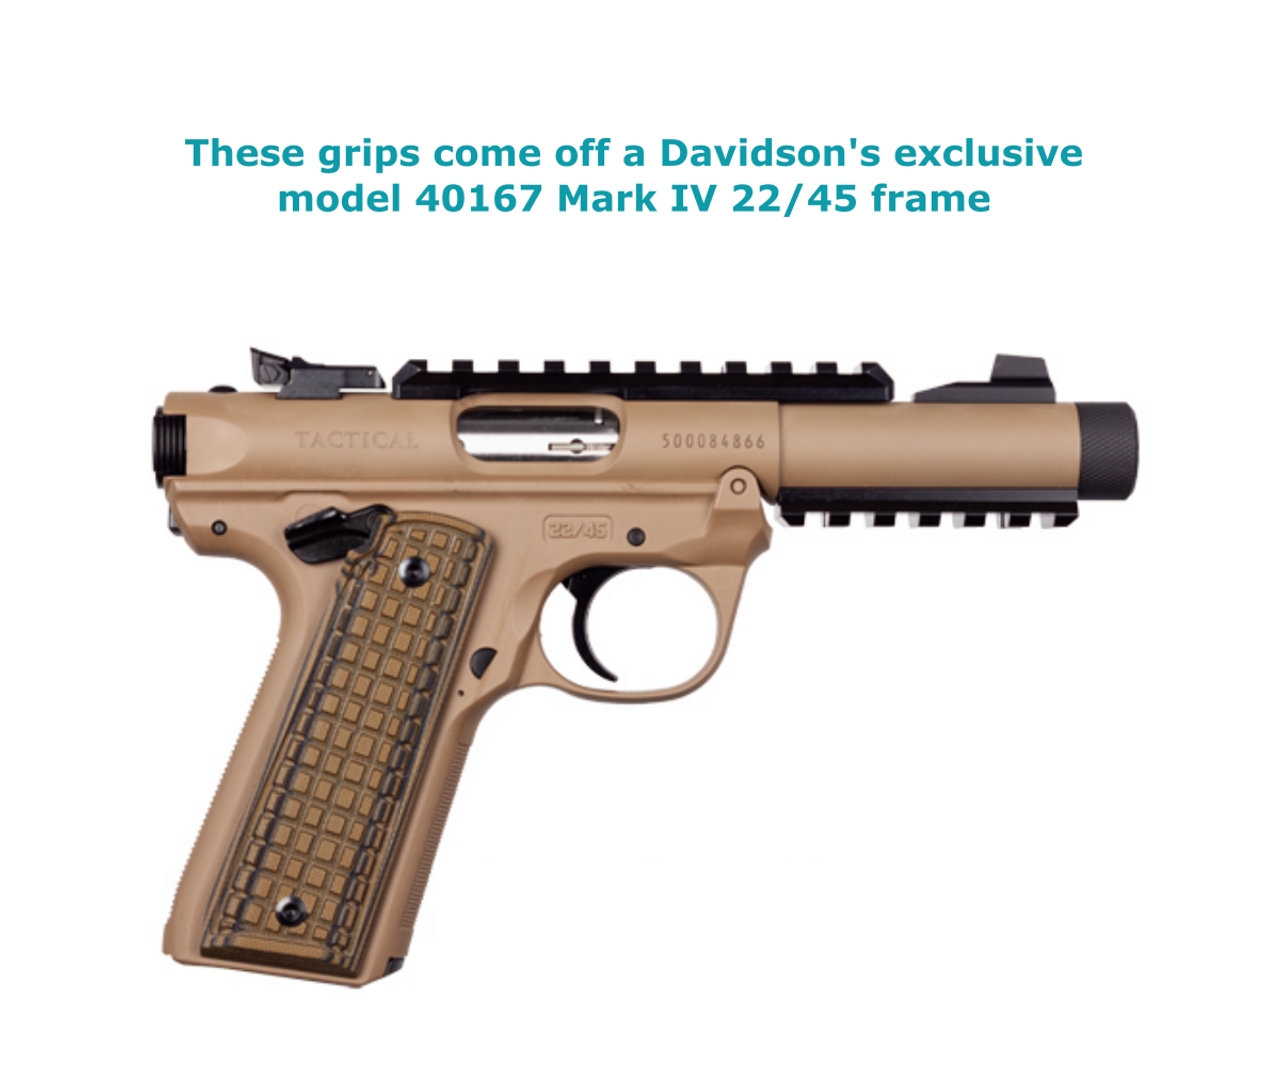 Pachmayr G10 Tan/Black Tactical Pistol Grips for Mark IV 22/45 Frame